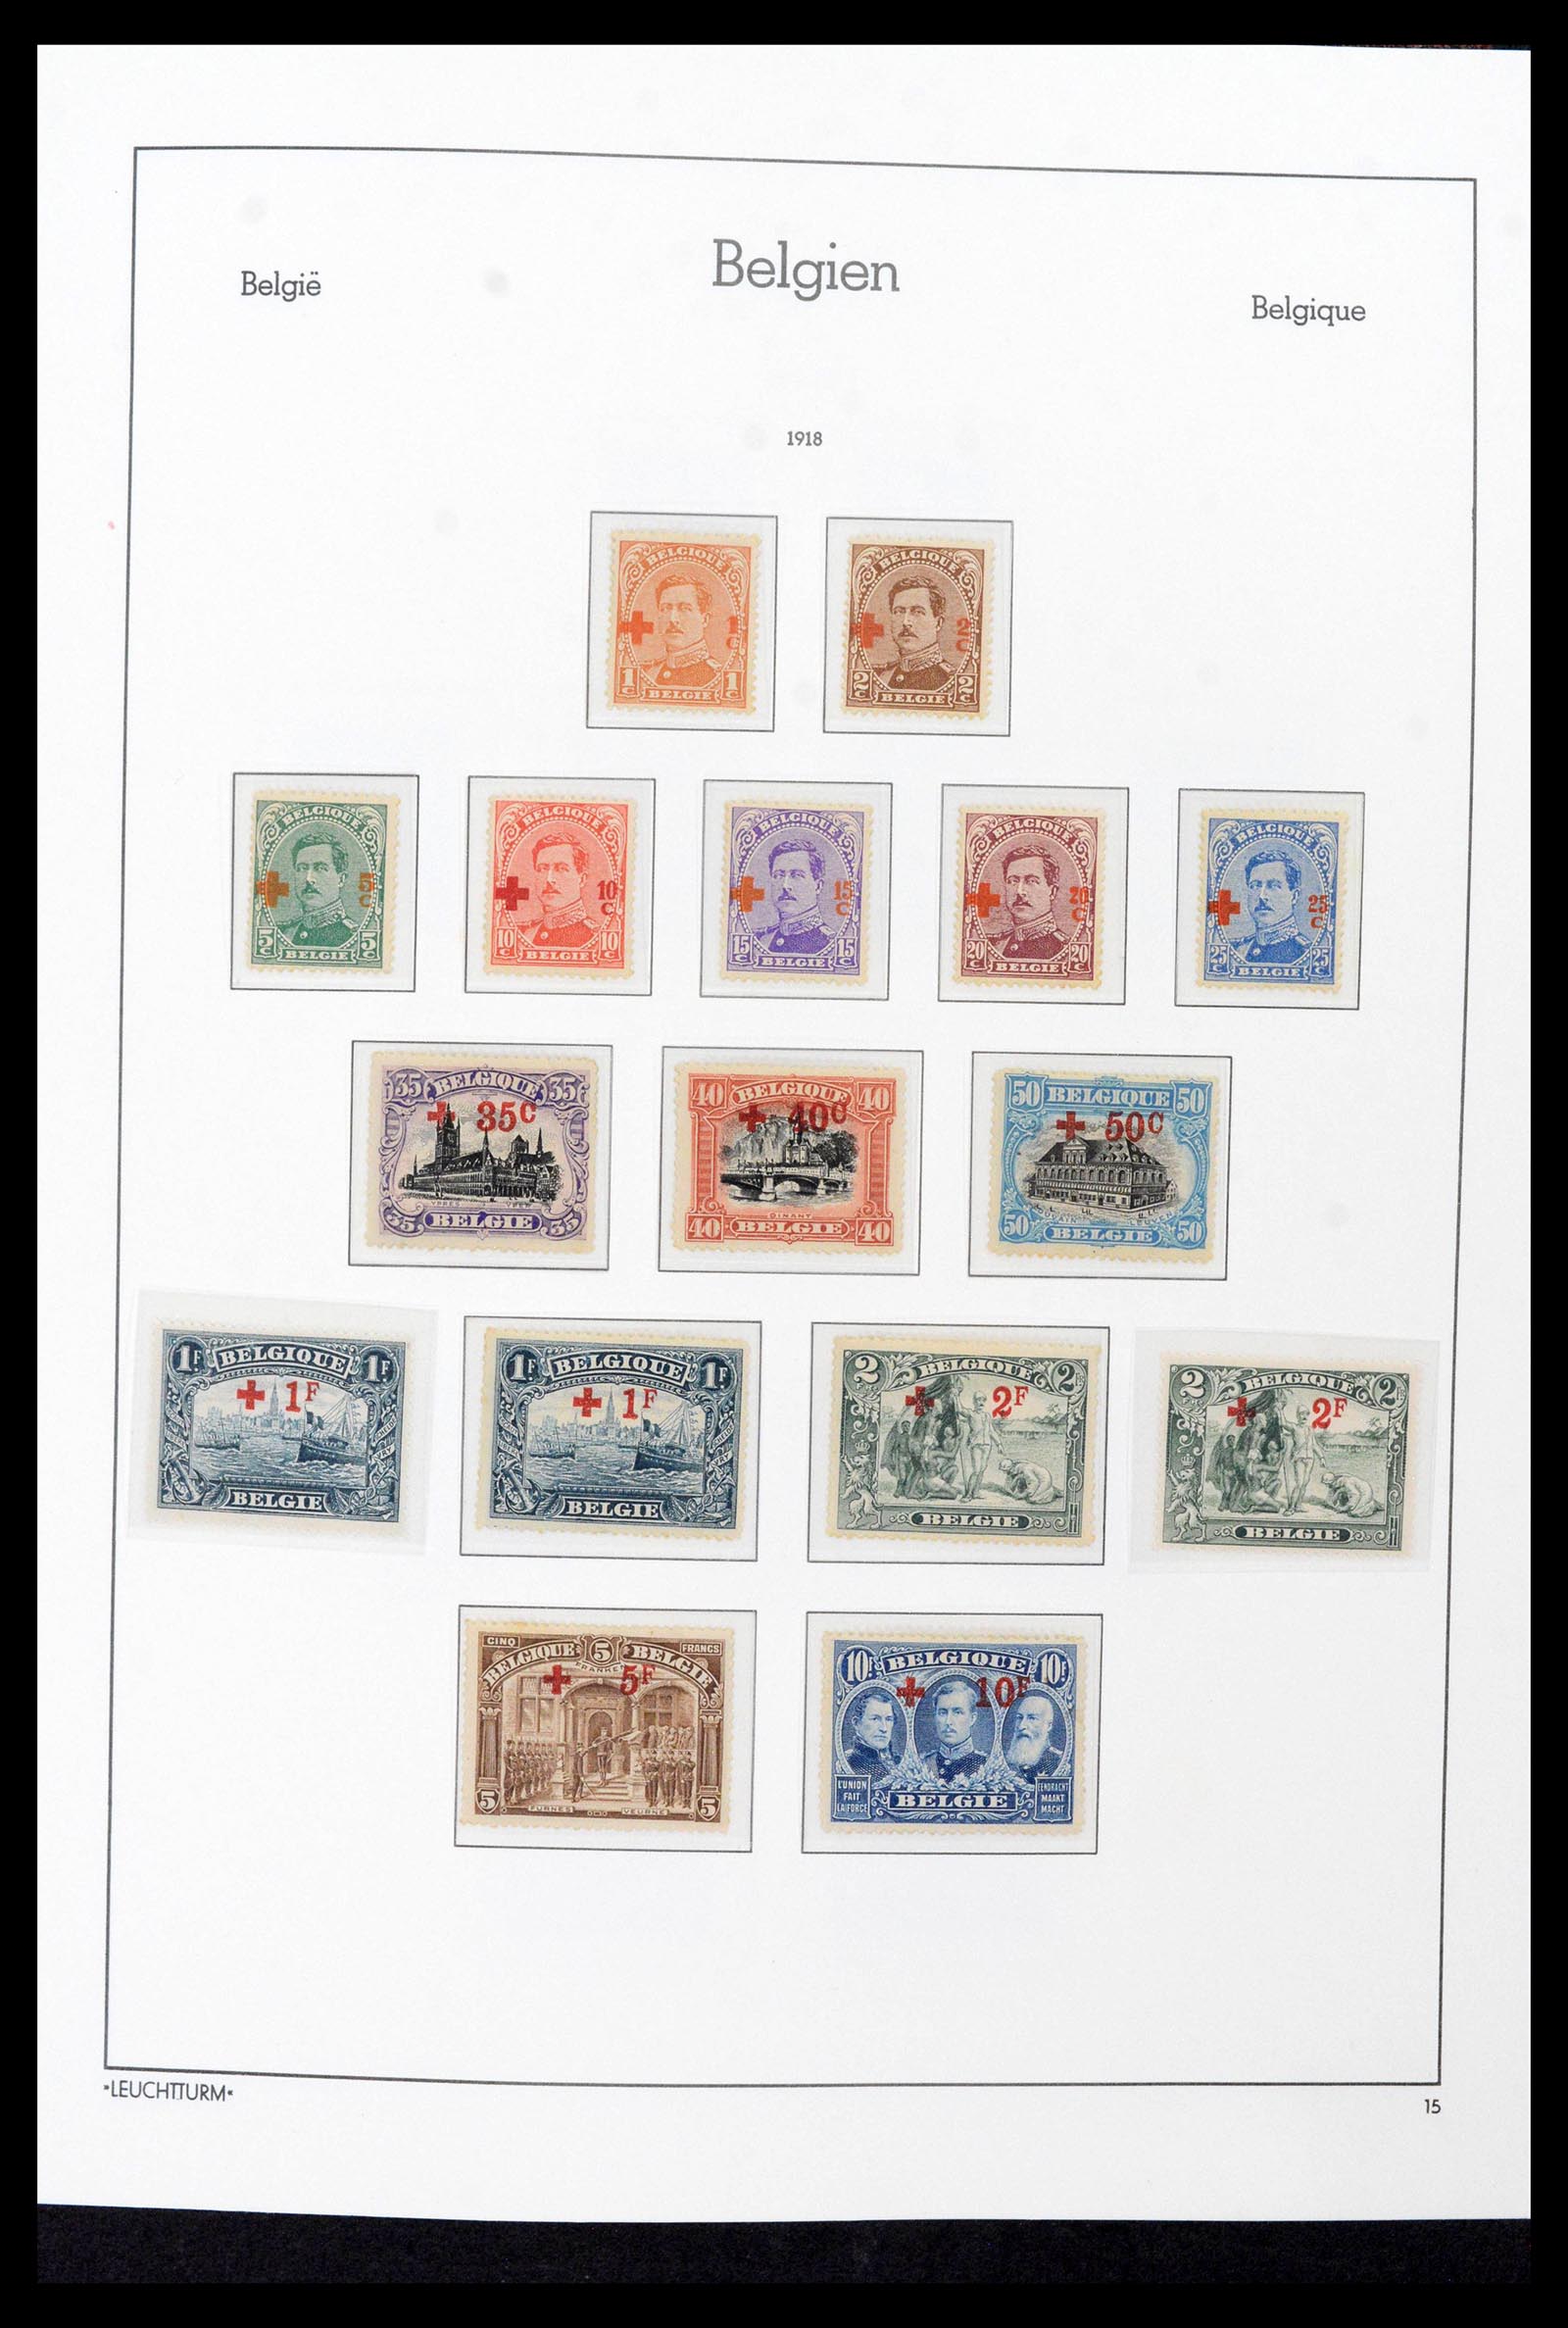 39137 0022 - Stamp collection 39137 Belgium 1849-2002.